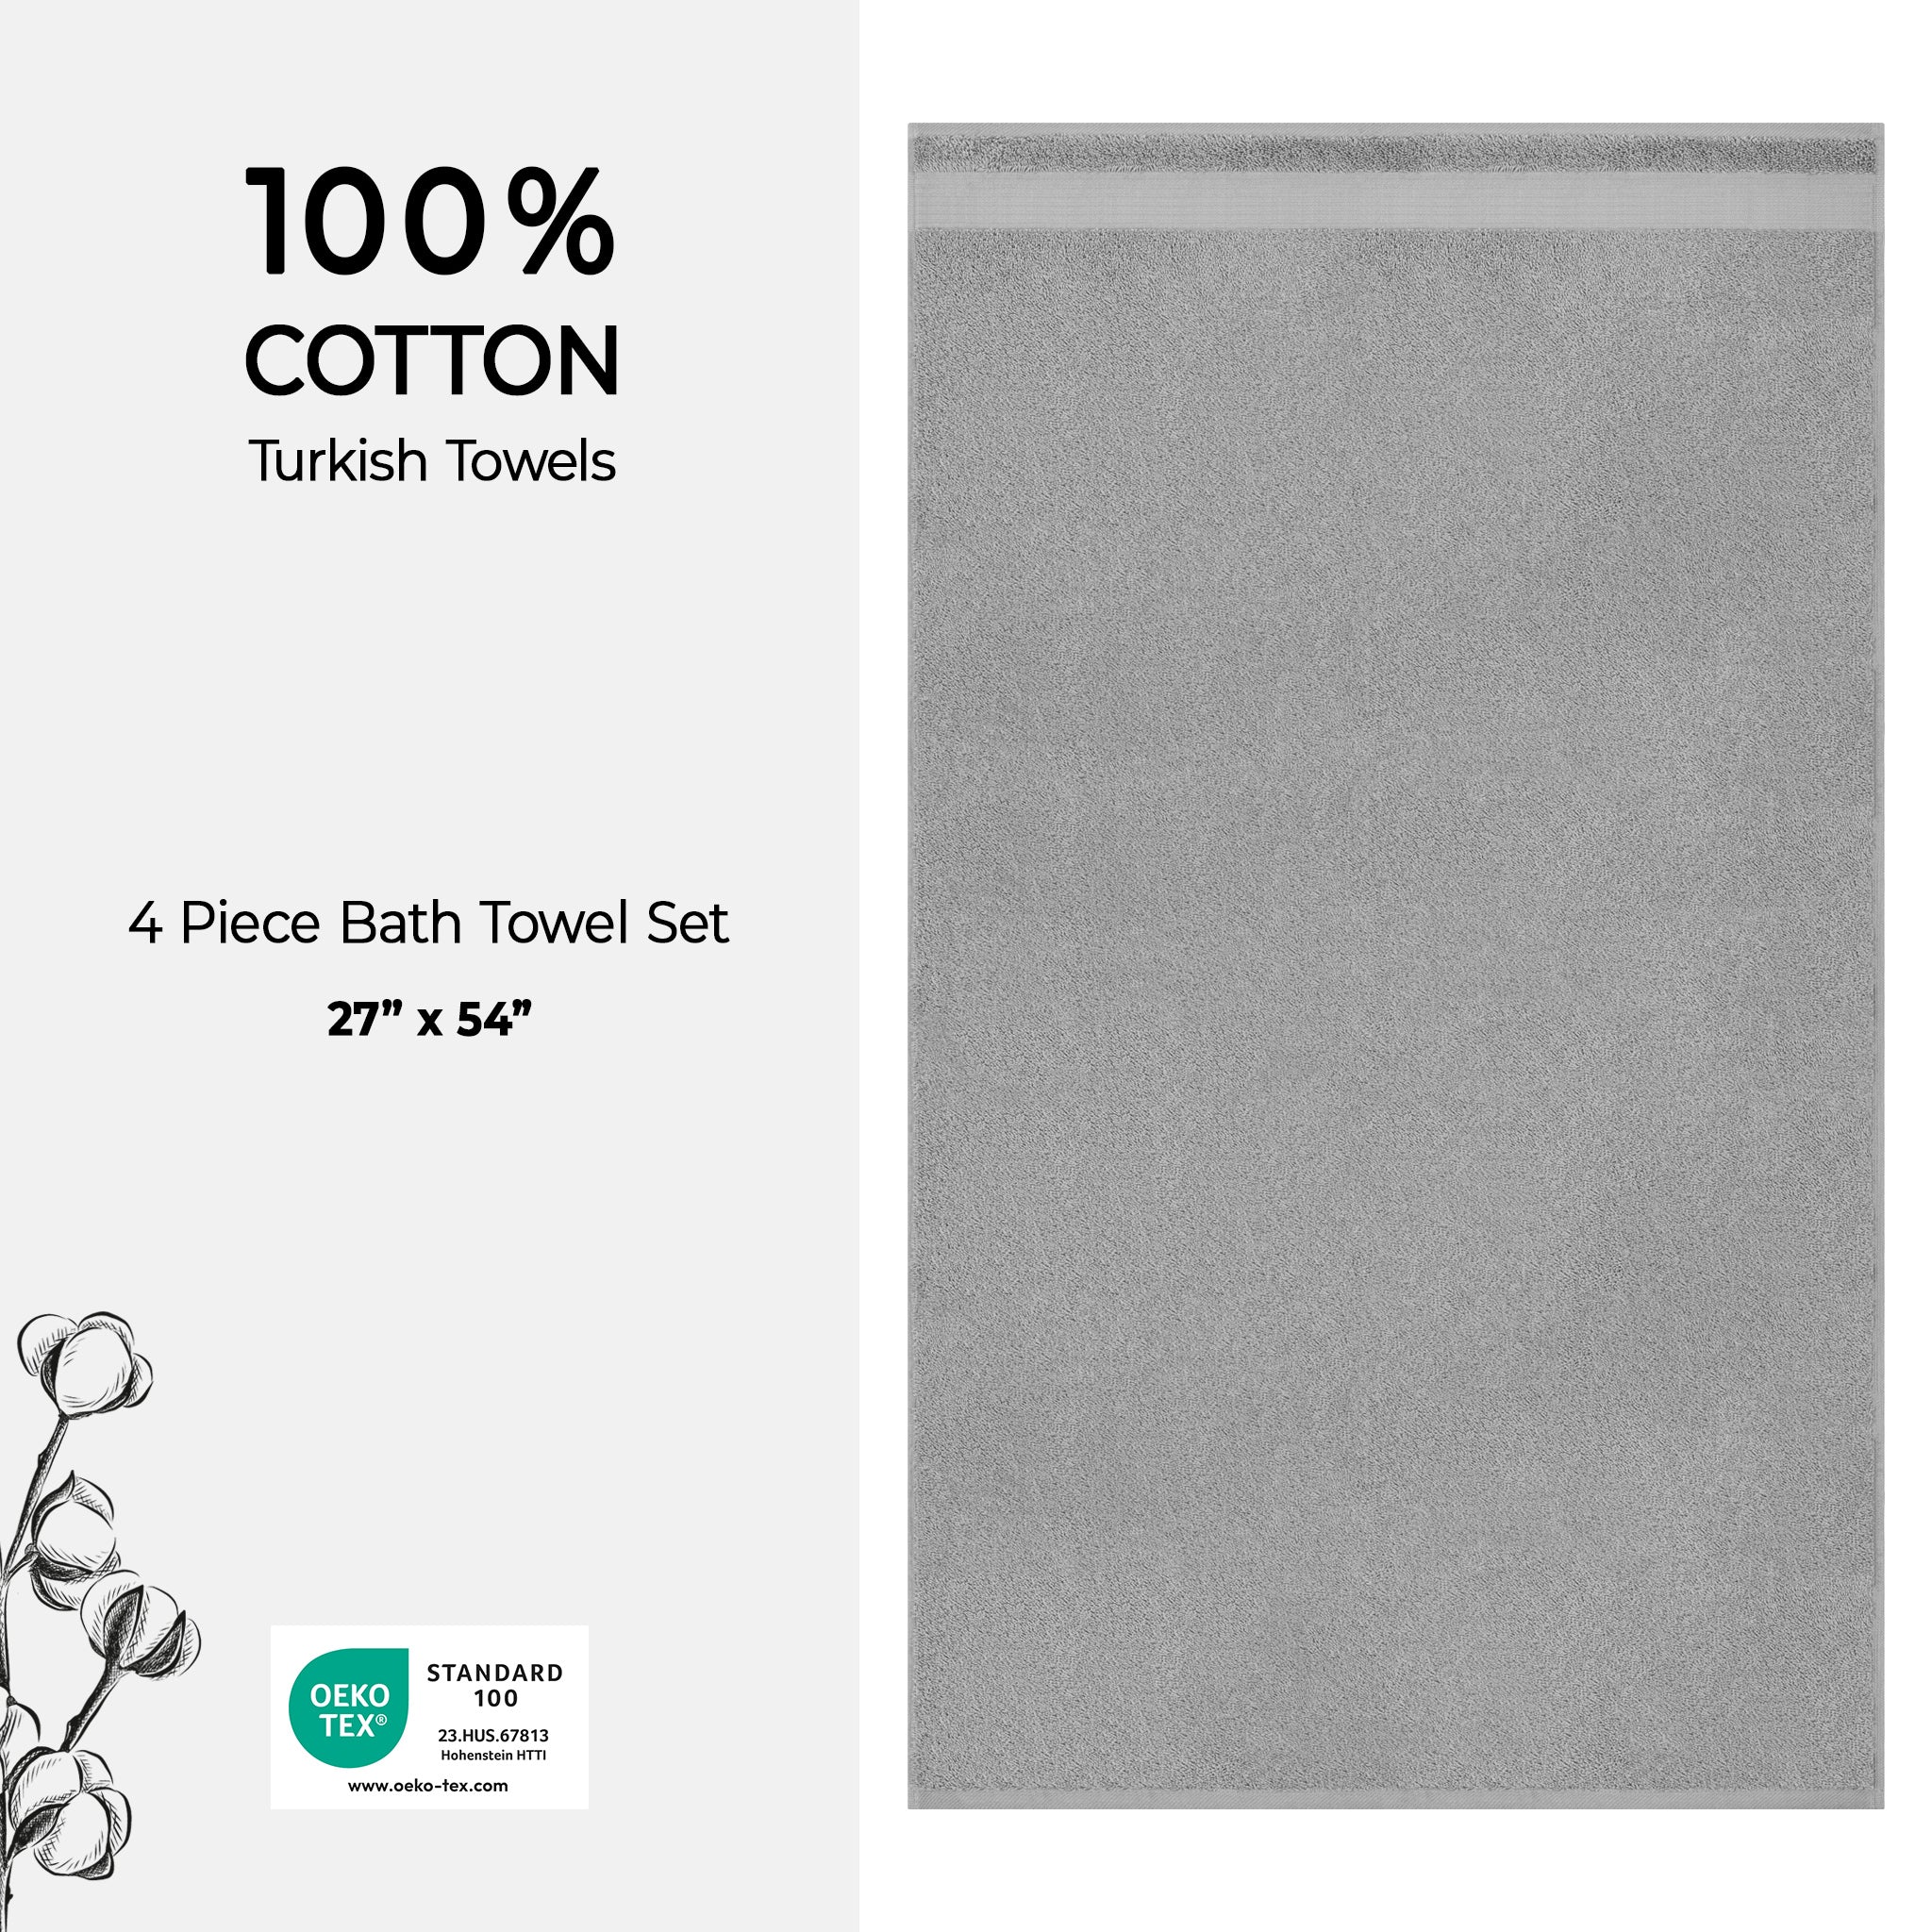 American Soft Linen Bekos 100% Cotton Turkish Towels, 4 Piece Bath Towel Set -rockridge-gray-04